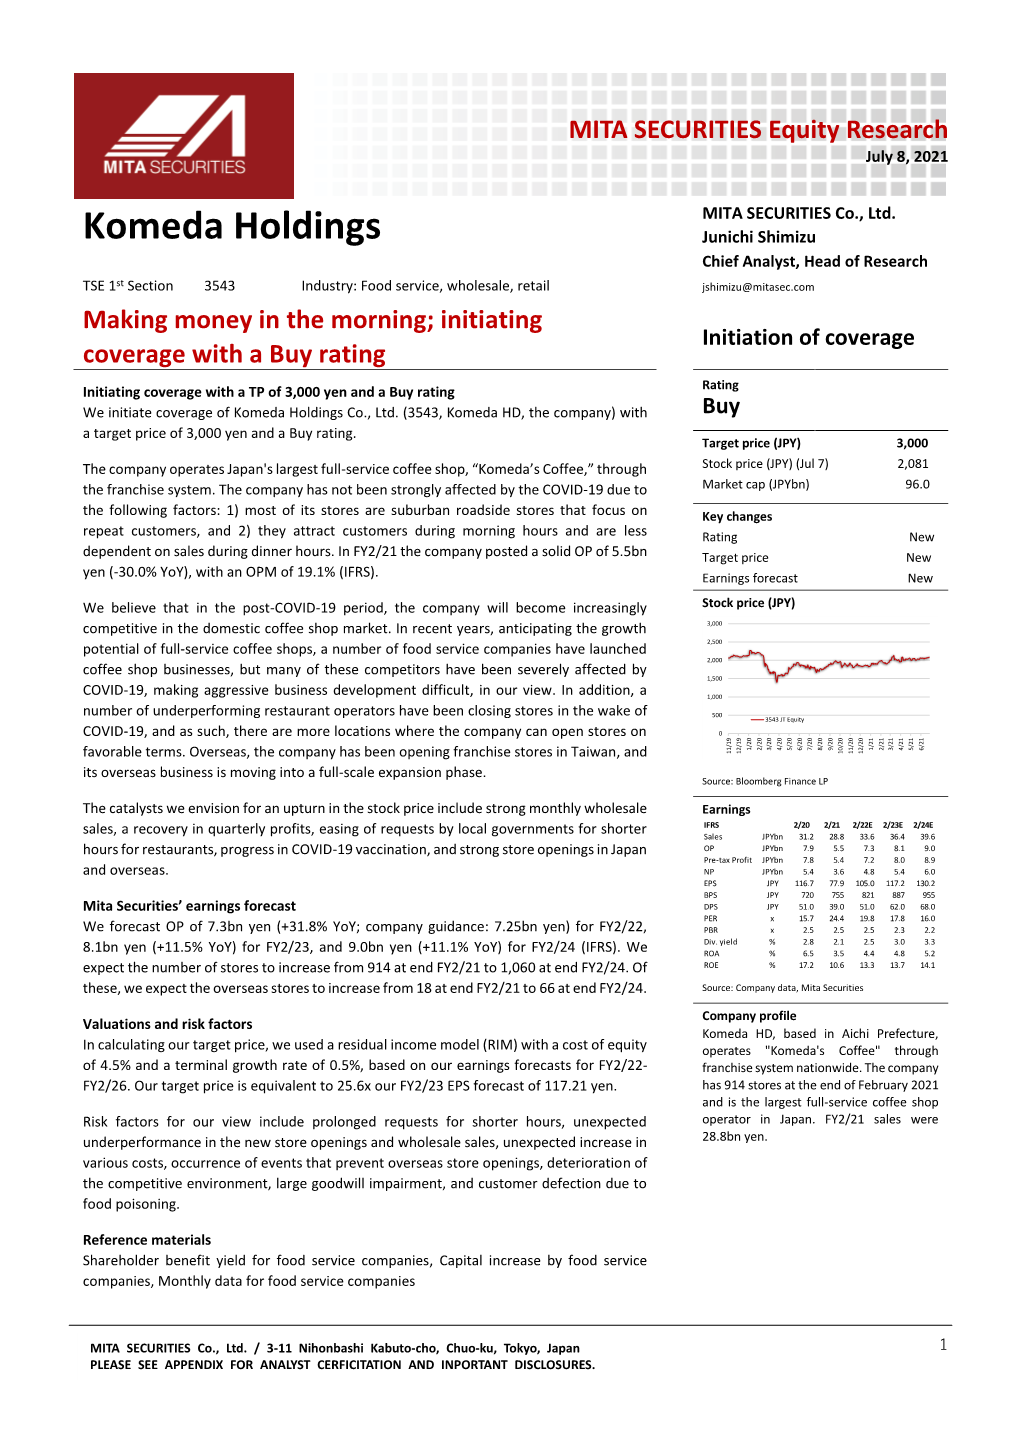 Komeda Holdings (3543): Making Money in the Morning; Initiating